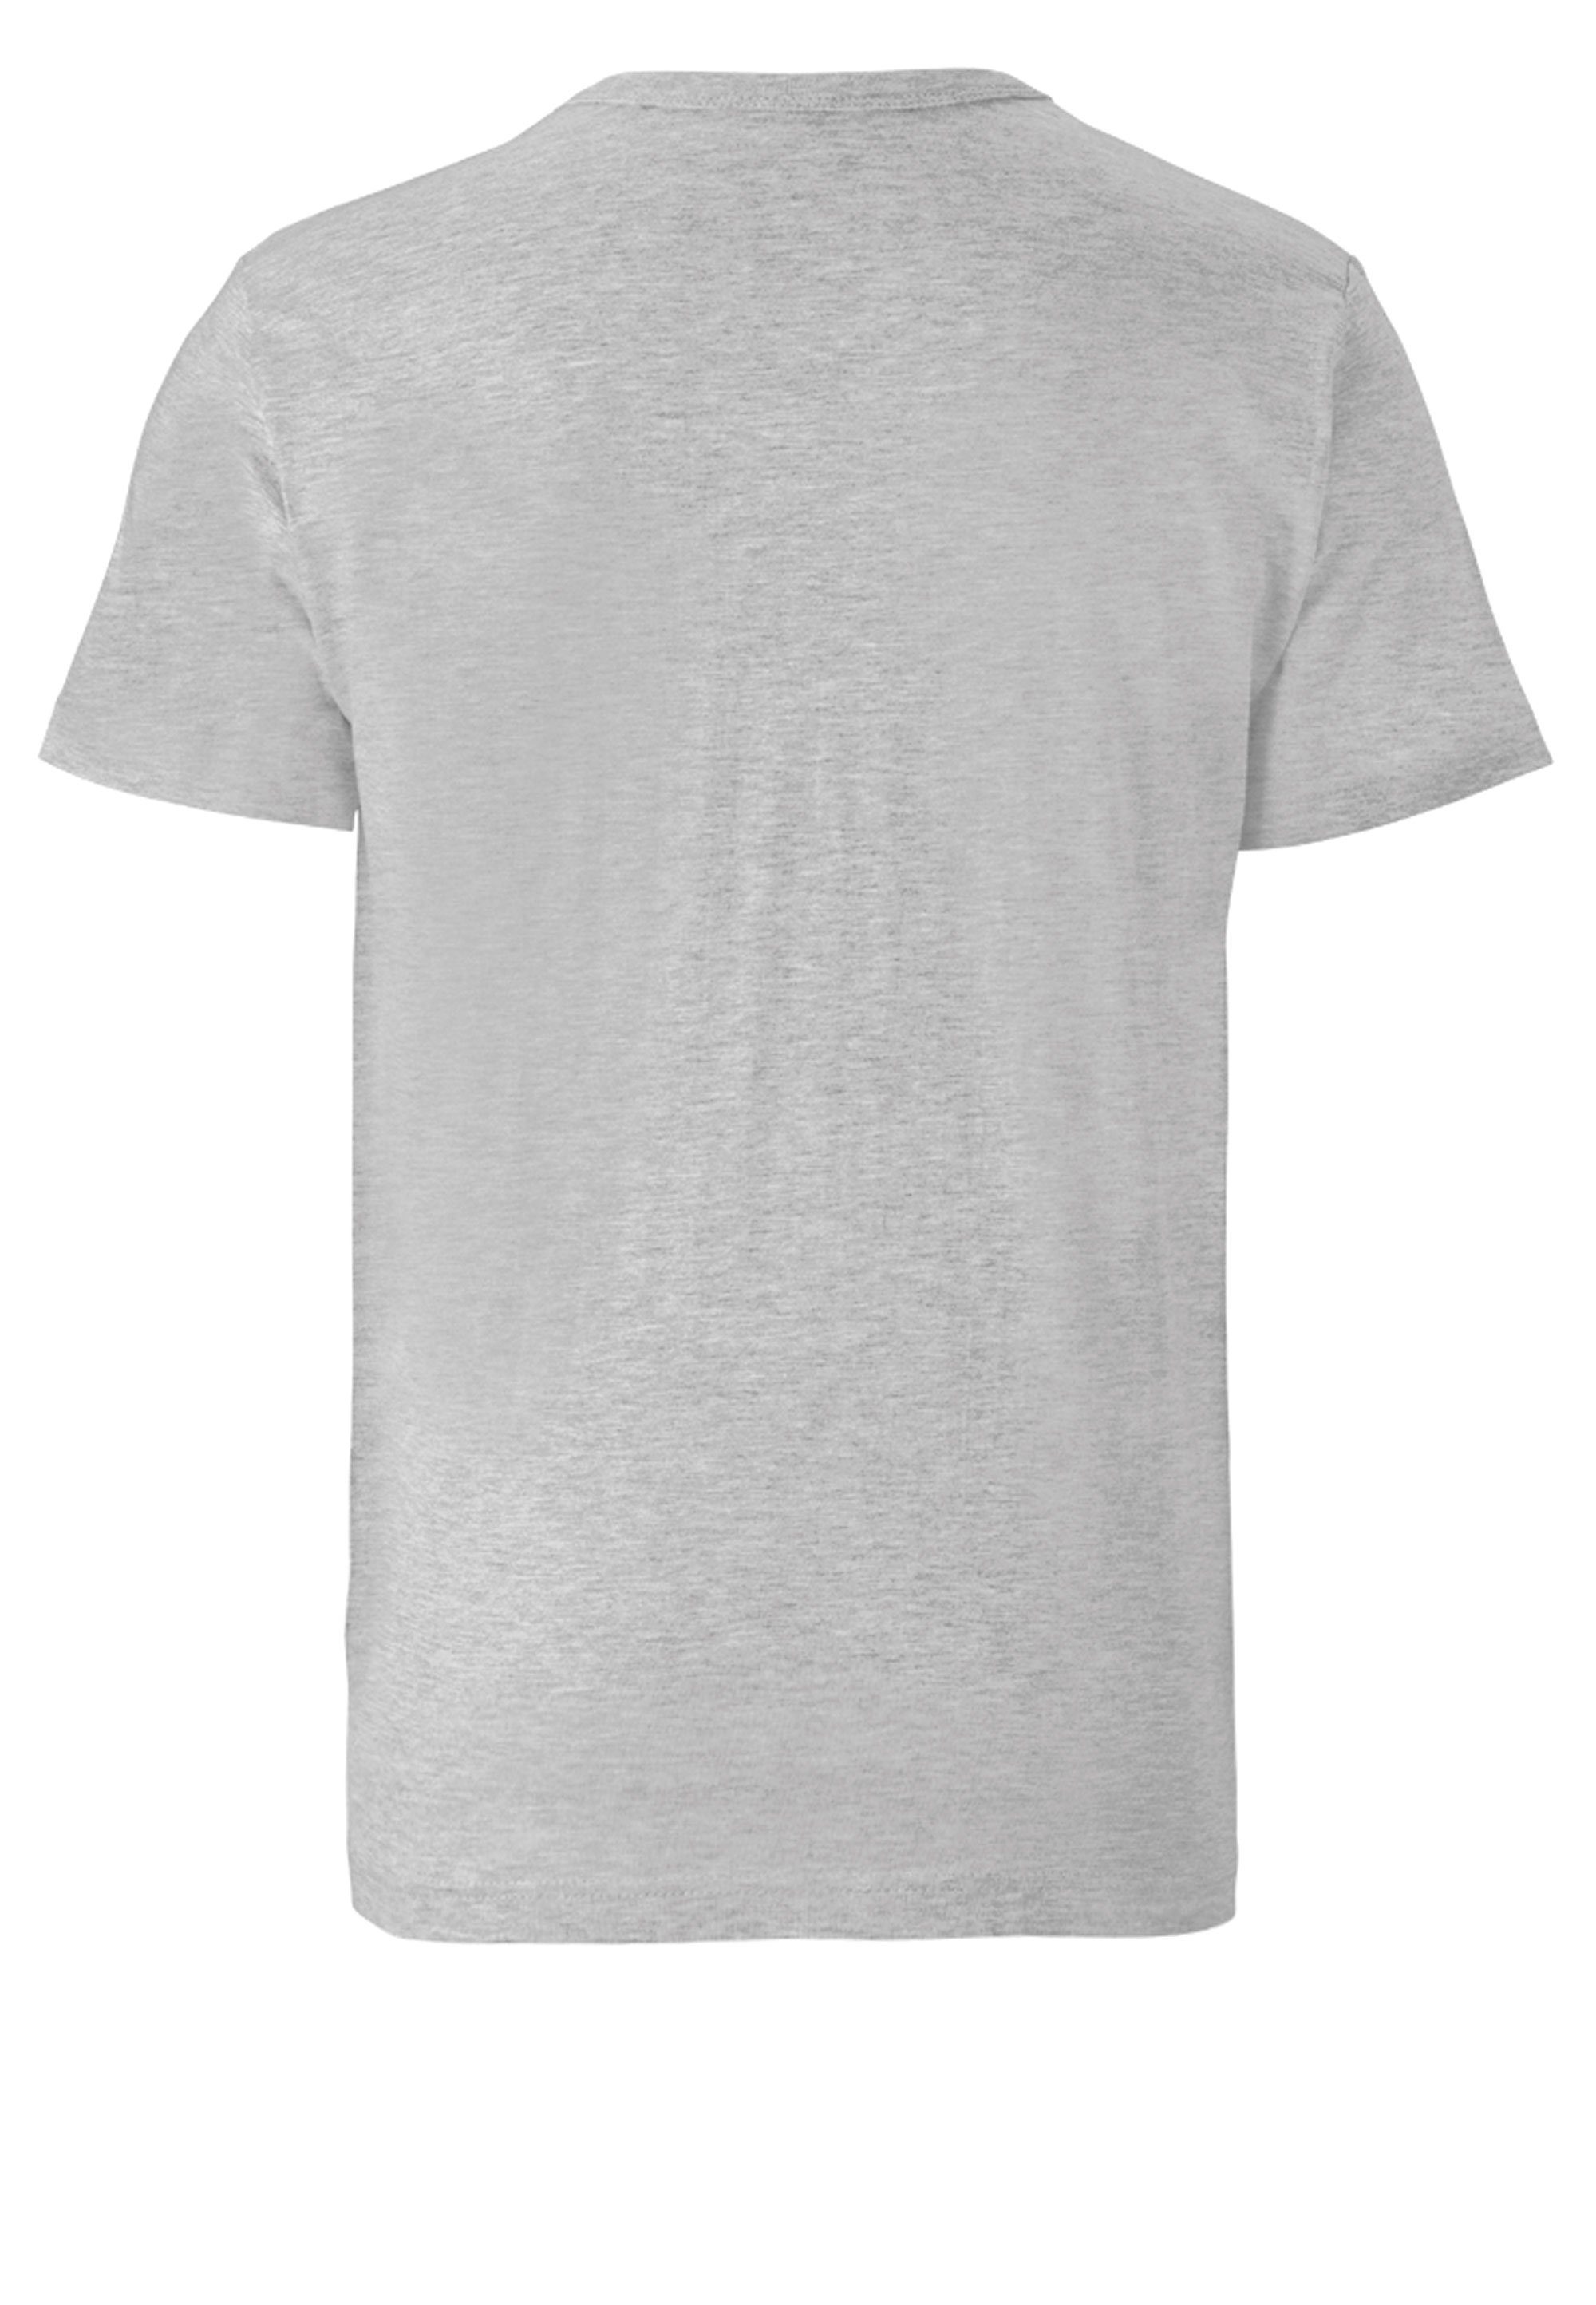 Krümelmonster Originalddesign lizenziertem - T-Shirt grau-meliert mit LOGOSHIRT Sesamstrasse